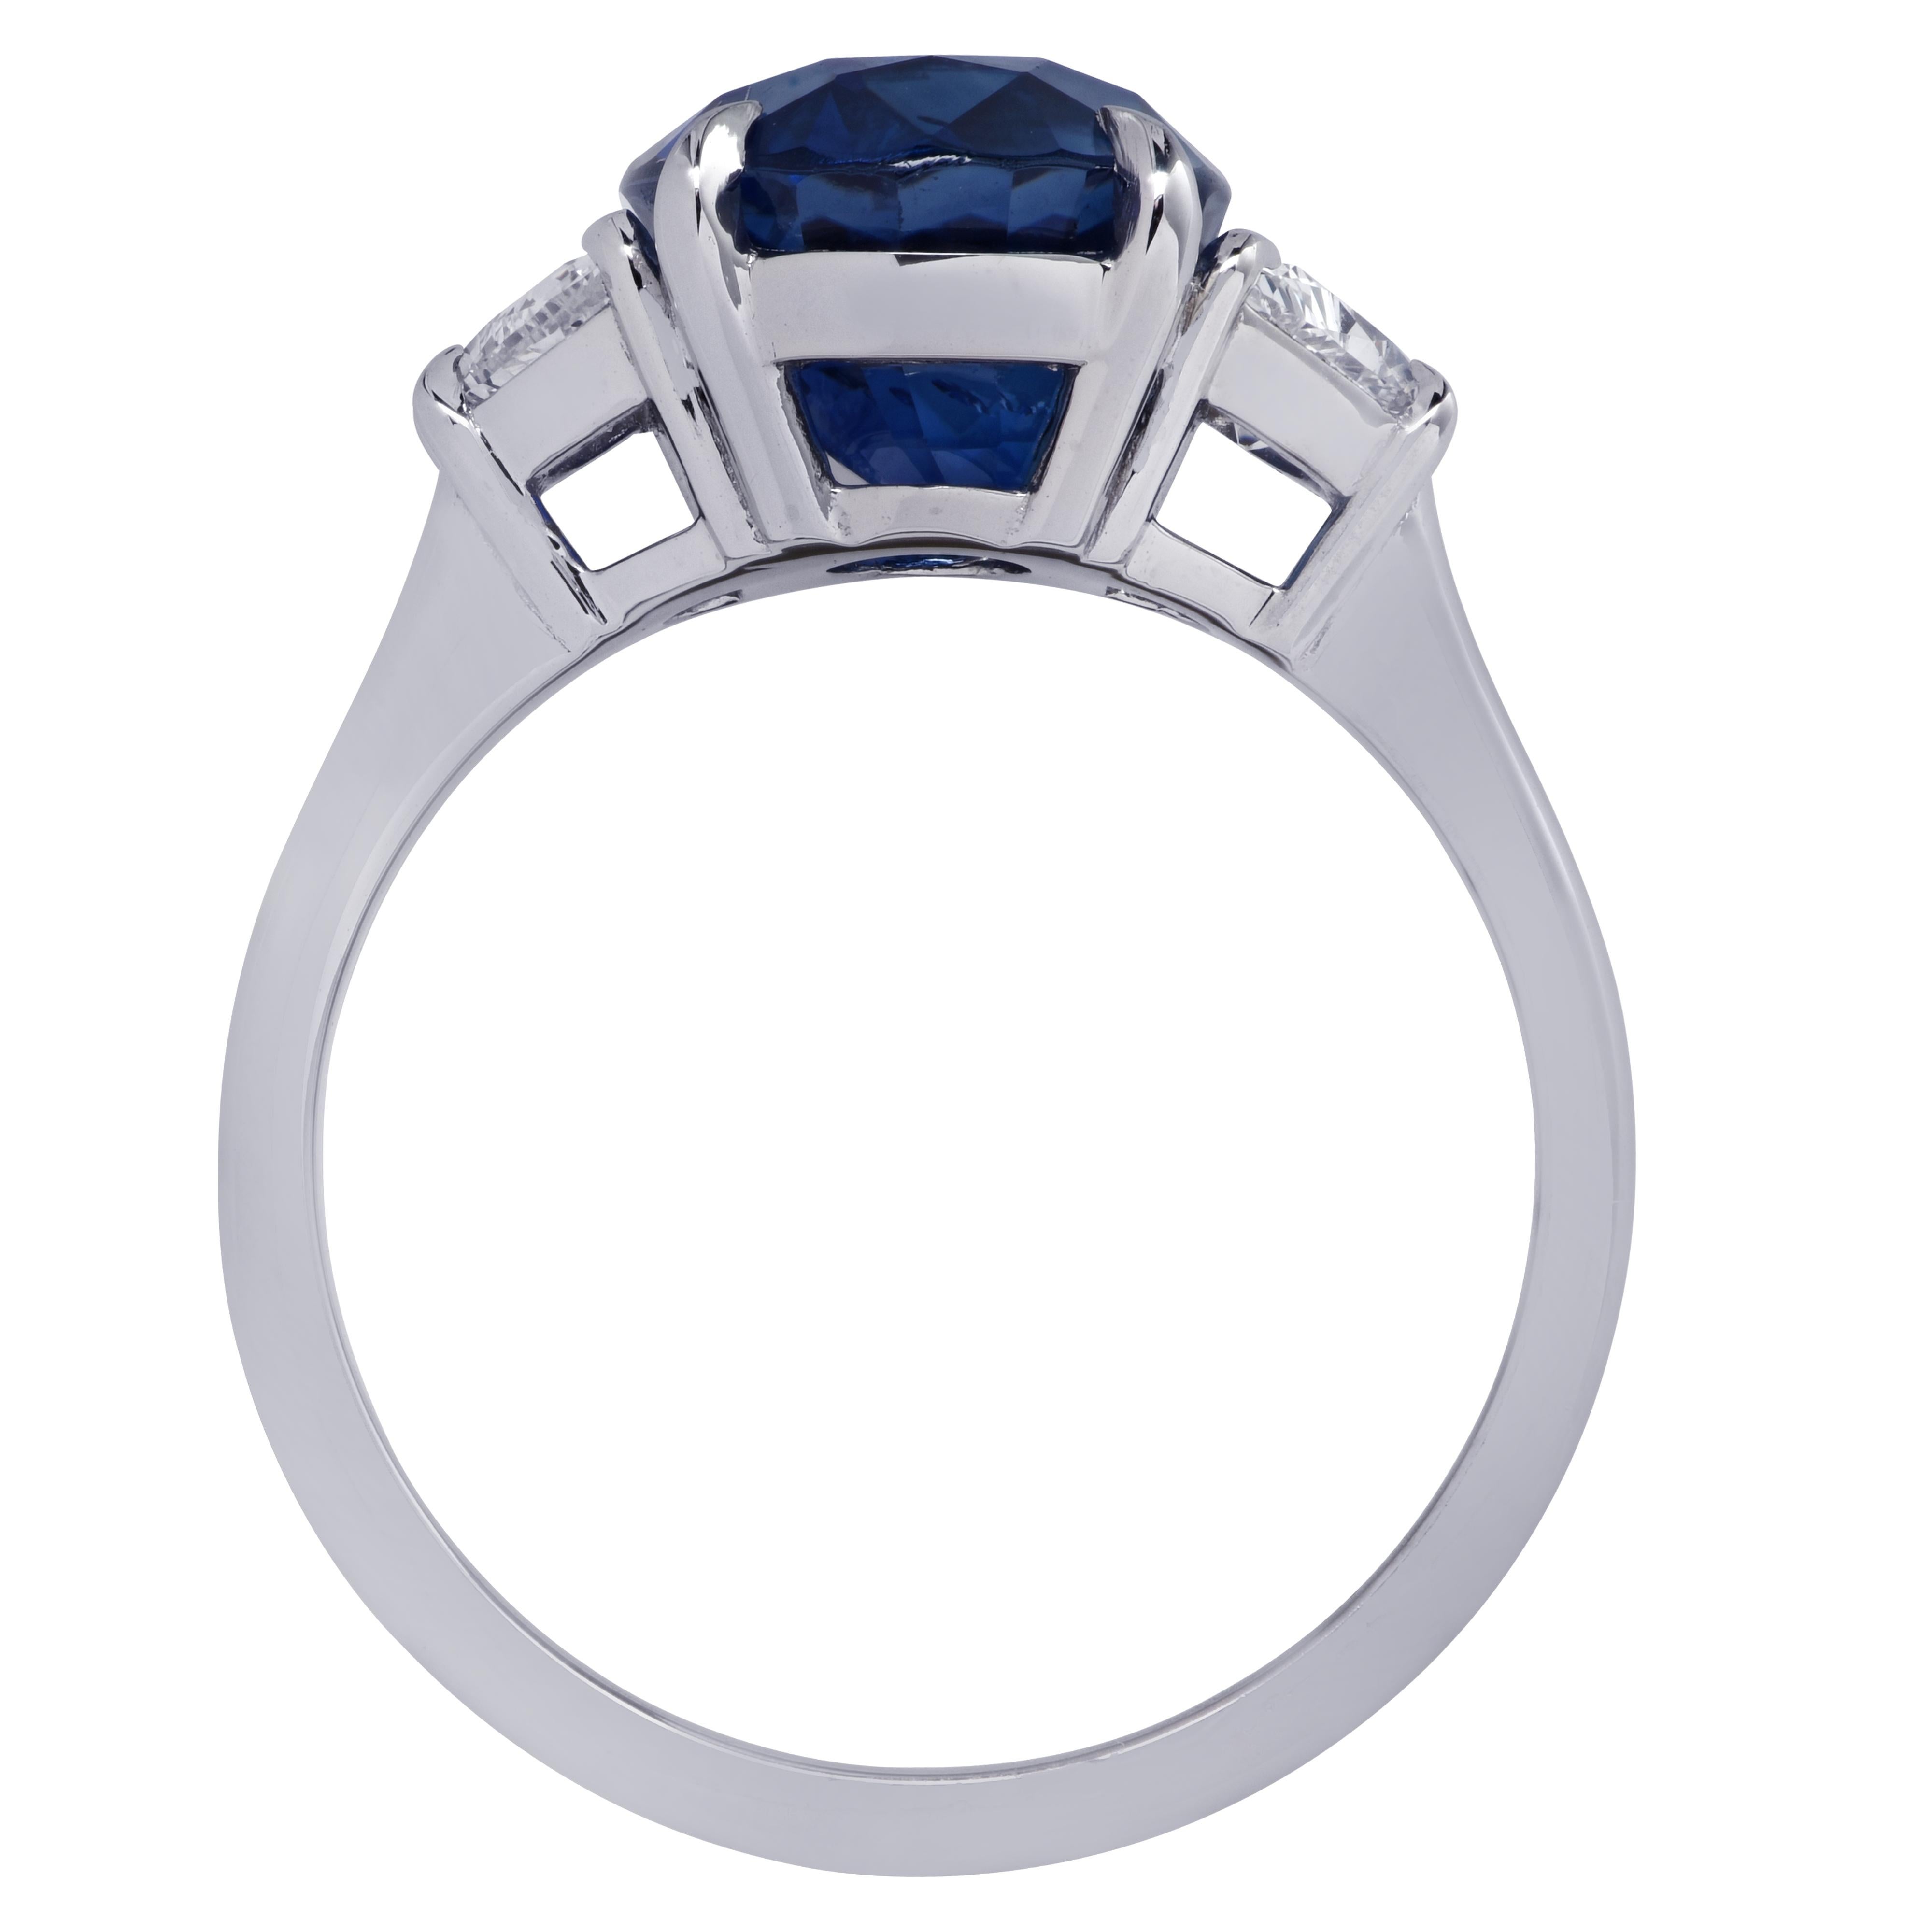 Oval Cut Vivid Diamonds GIA Certified 5.13 Carat Sapphire Engagement Ring